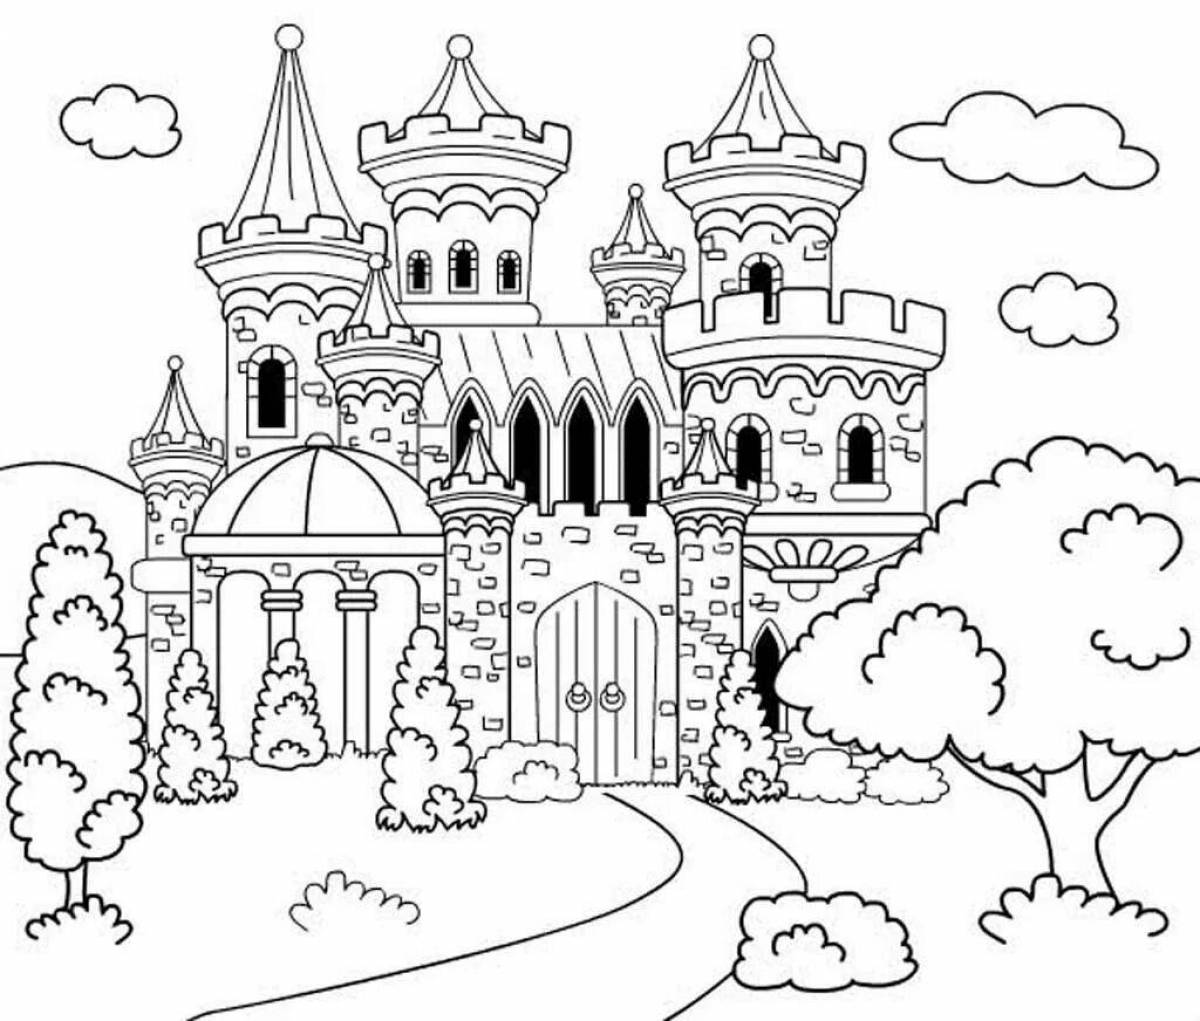 Coloring book charming magic castle